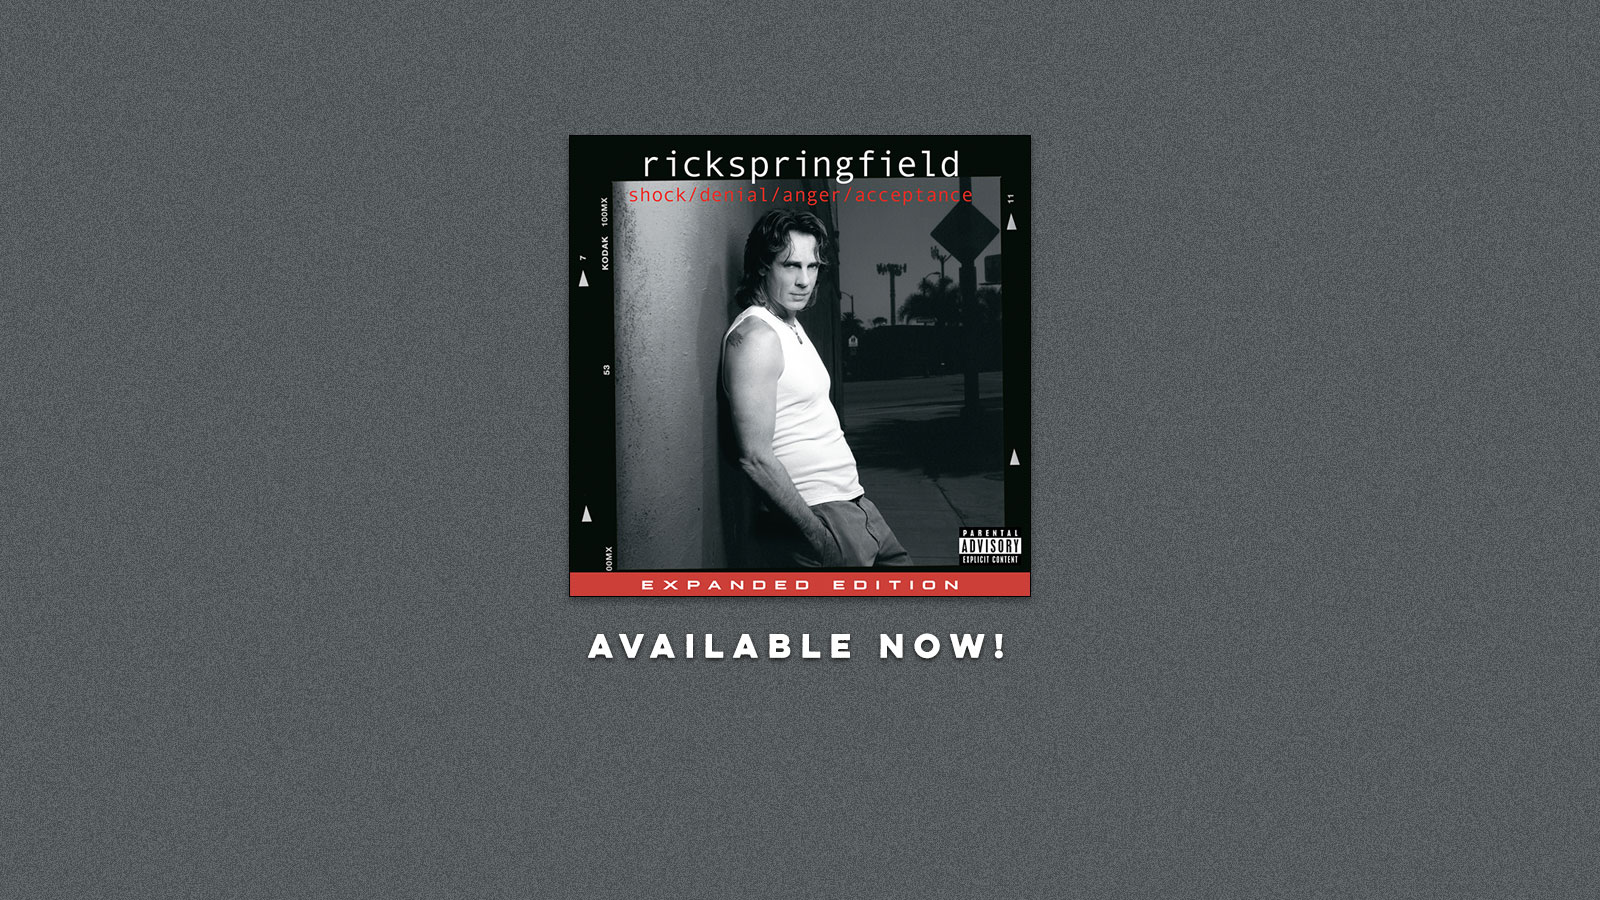 Rick Springfield - shock/denial/anger/acceptance